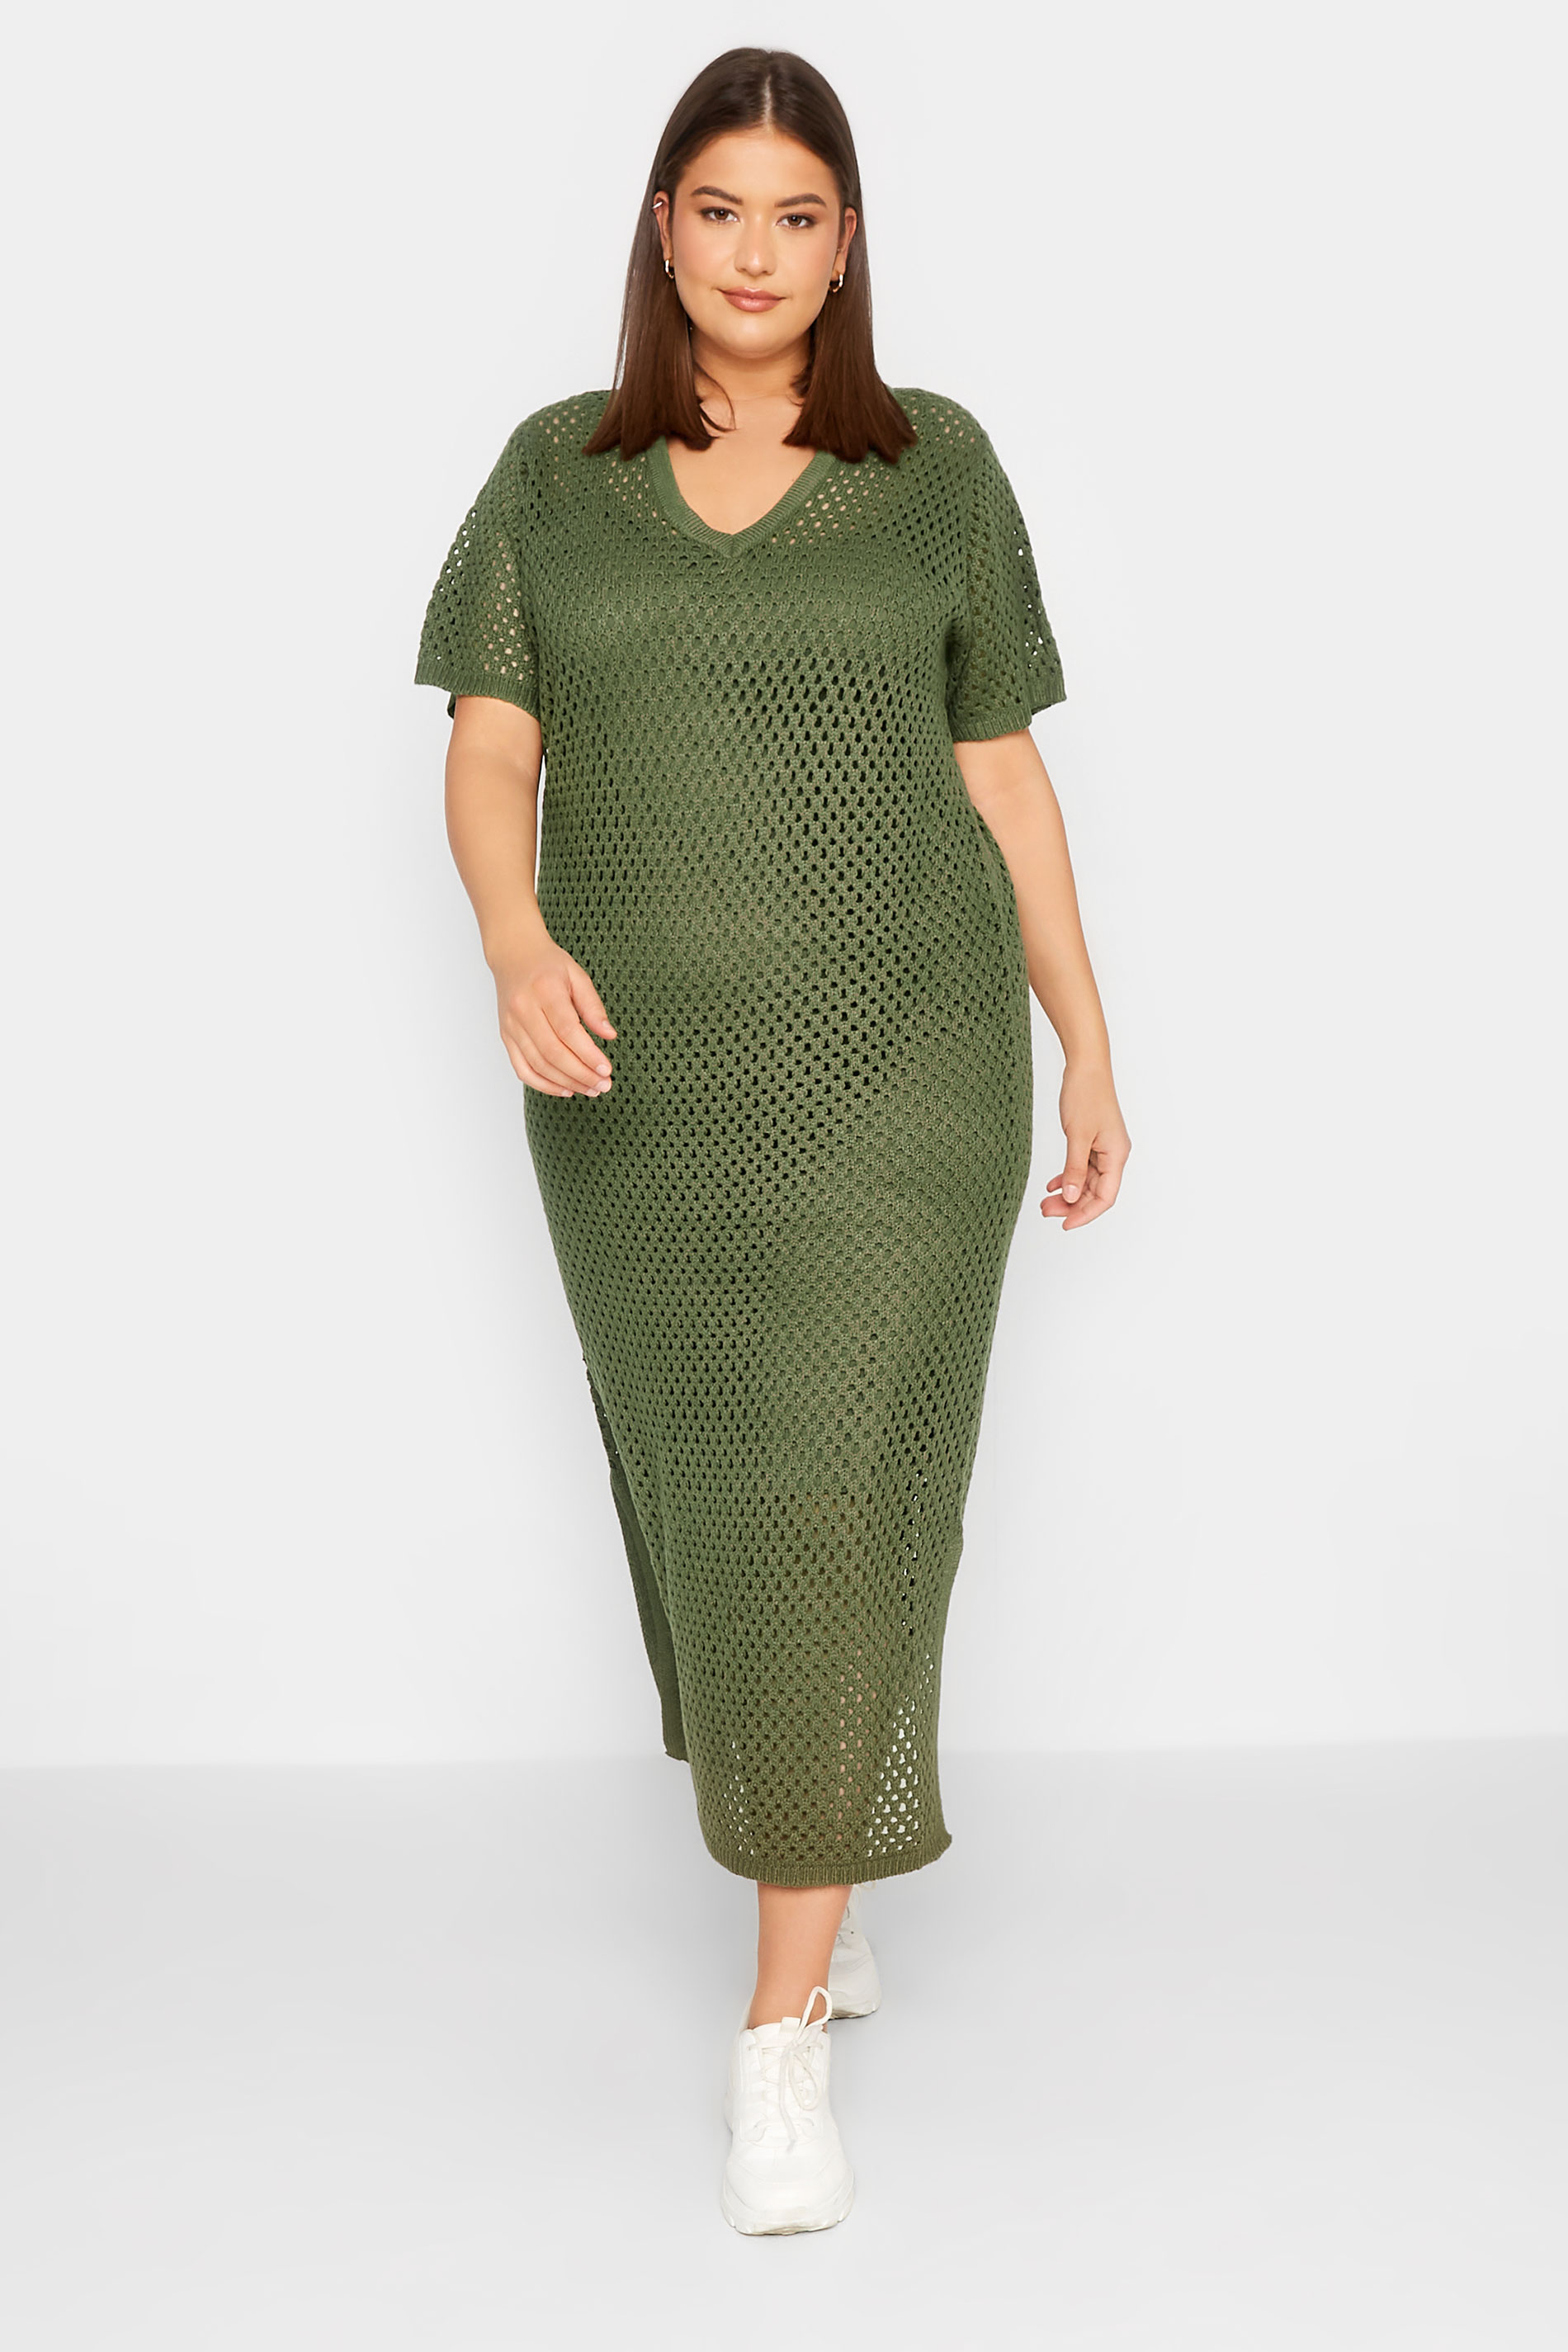 LTS Tall Khaki Green Crochet Midaxi Dress | Long Tall Sally 1